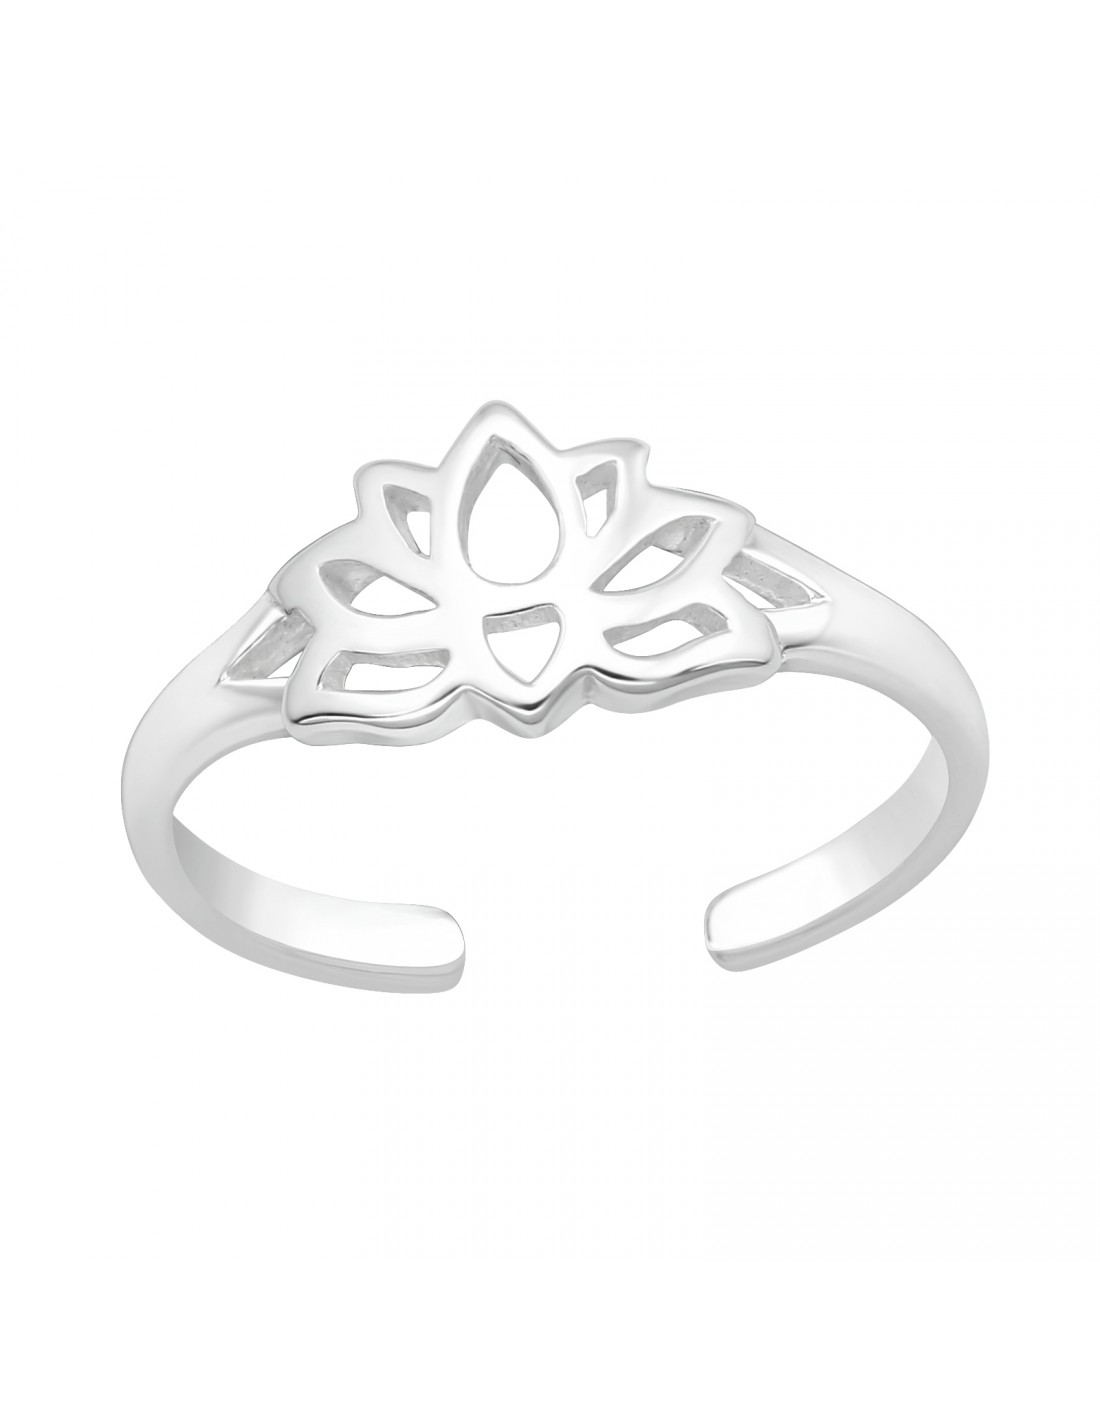 Sterling Silver Lotus Flower Adjustable Cute Toe Ring Set: 40432215982149 |  Canada